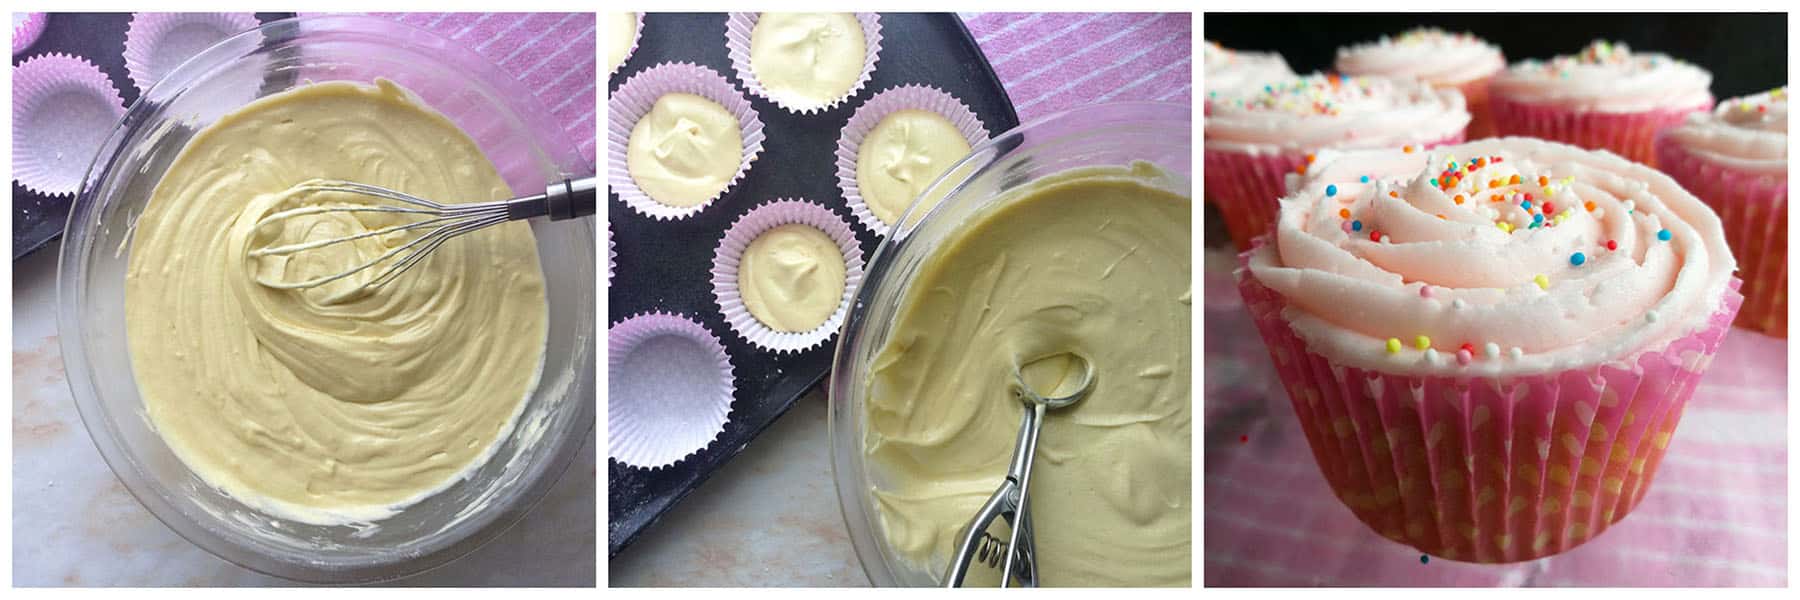 Vanilla Cupcake Recipe